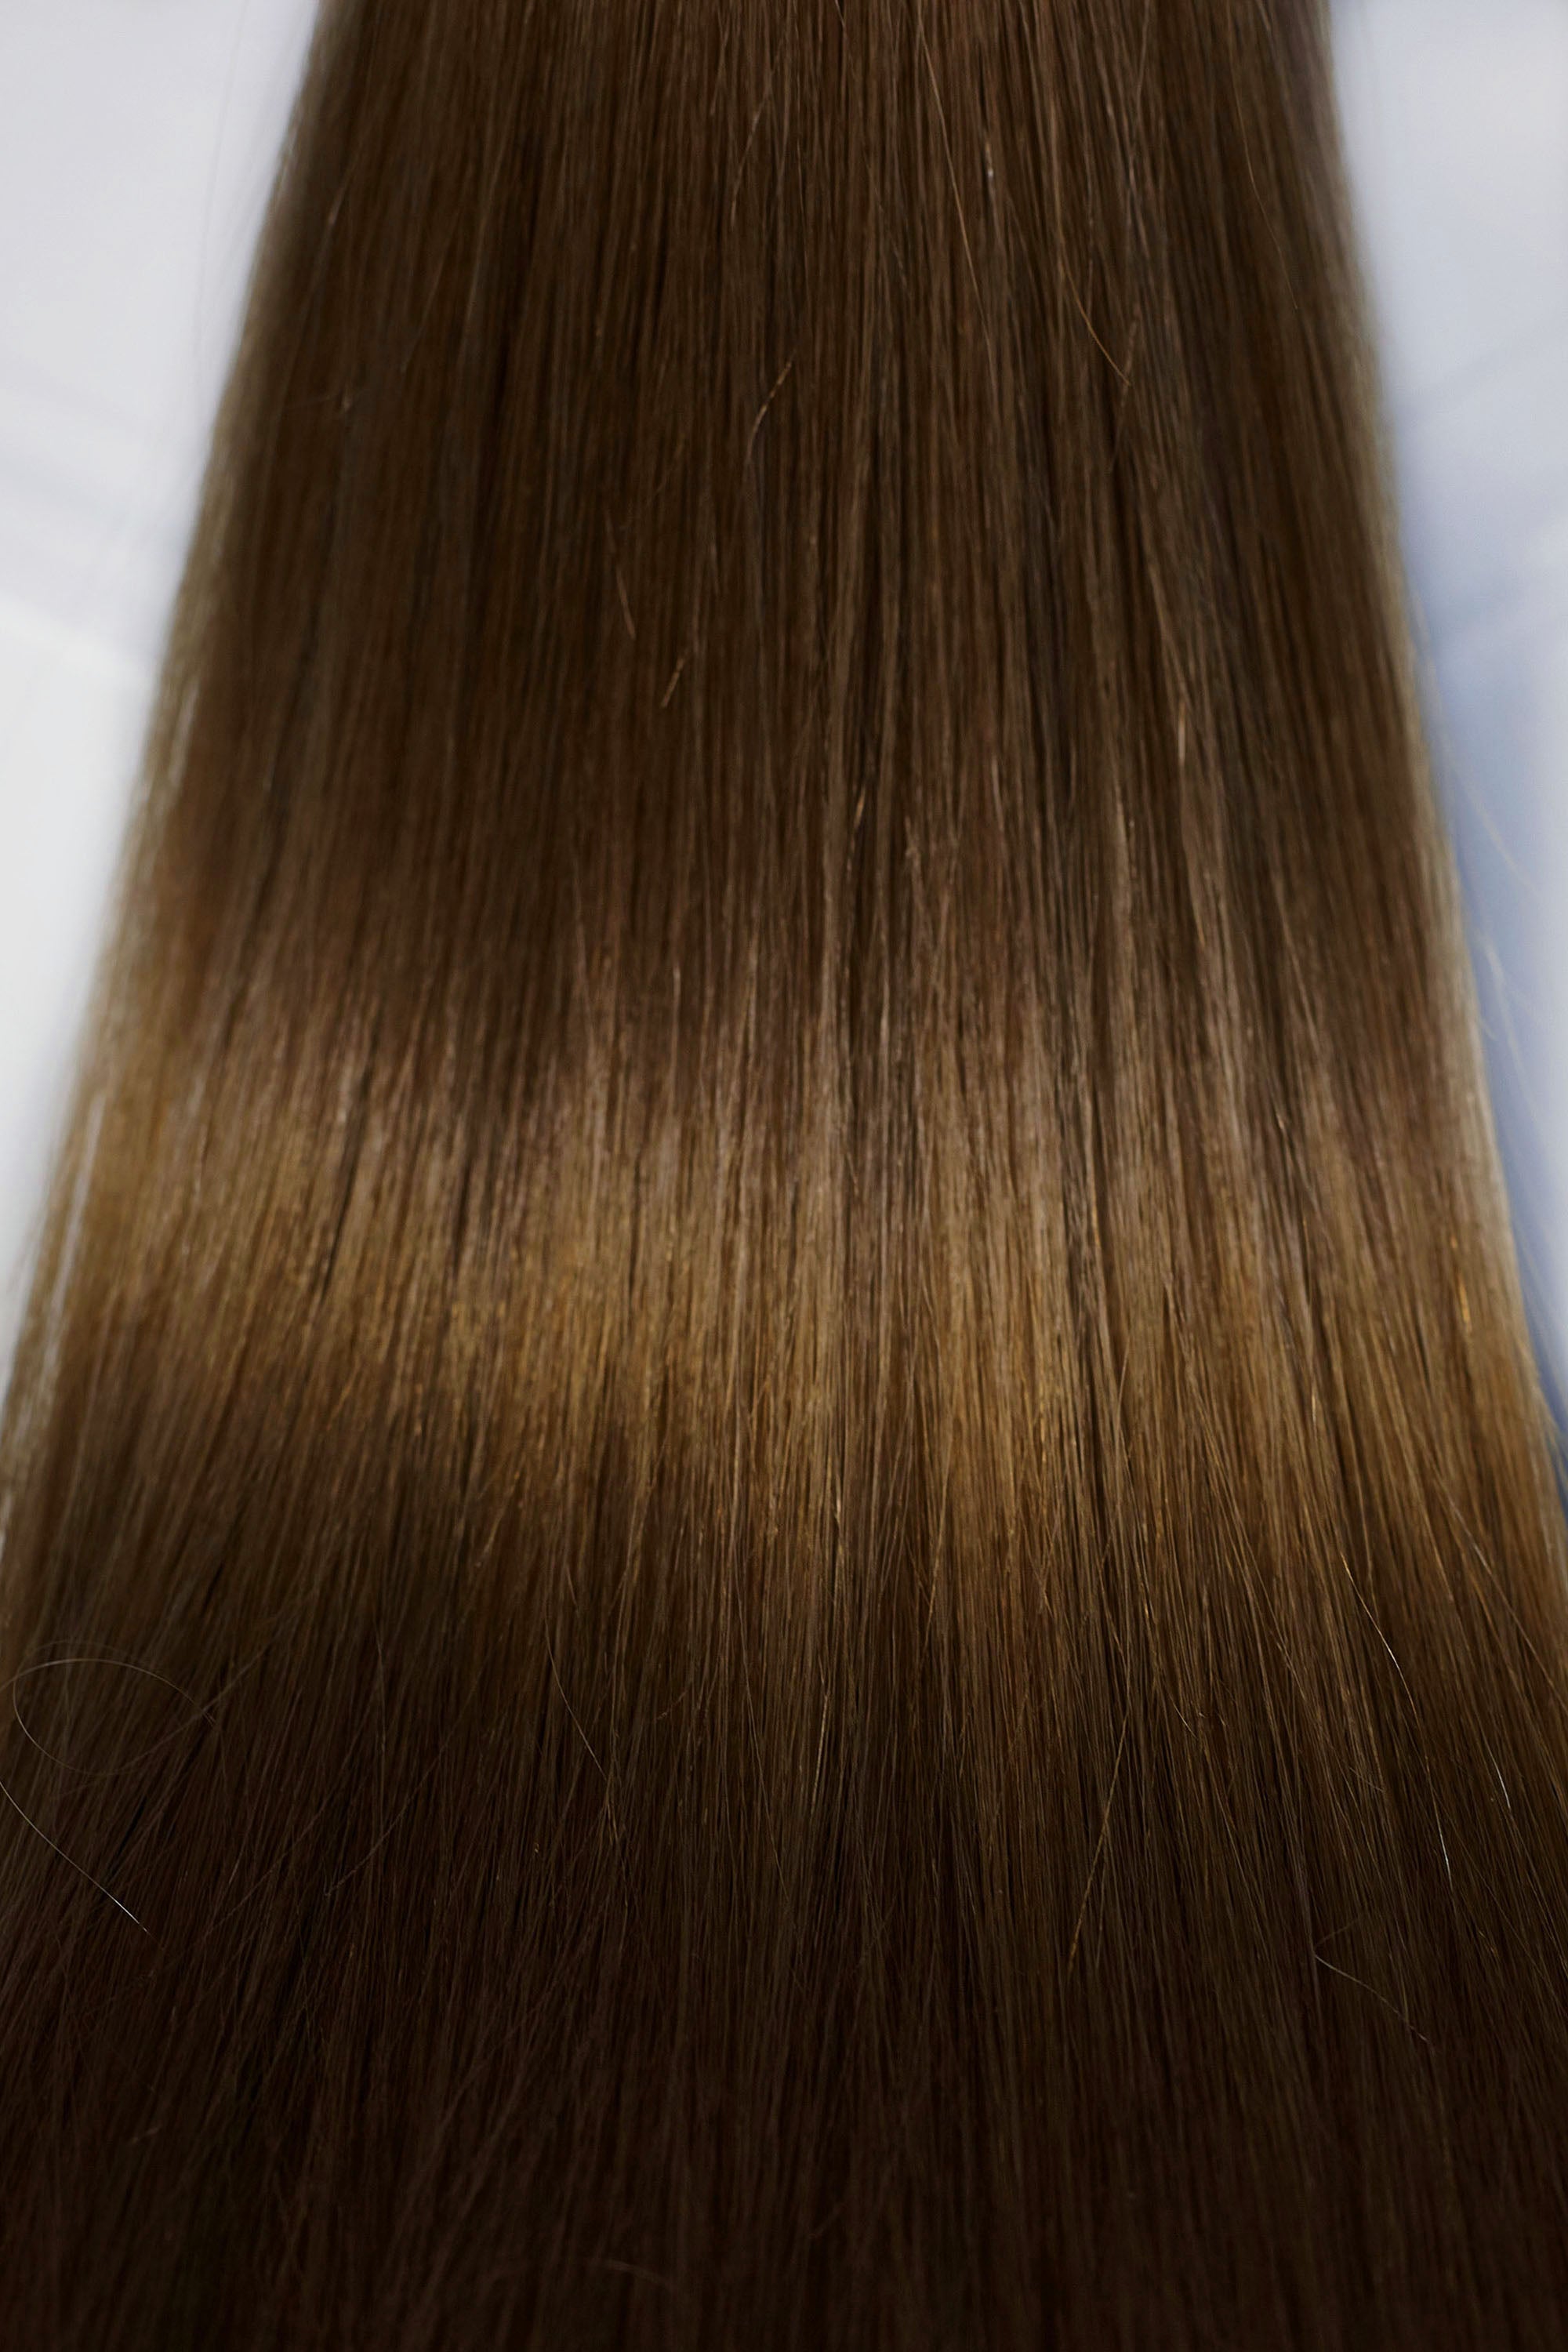 Behair professional Keratin Tip "Premium" 24" (60cm) Natural Straight Honey Walnut Brown #5 - 25g (Micro - 0.5g each pcs) hair extensions